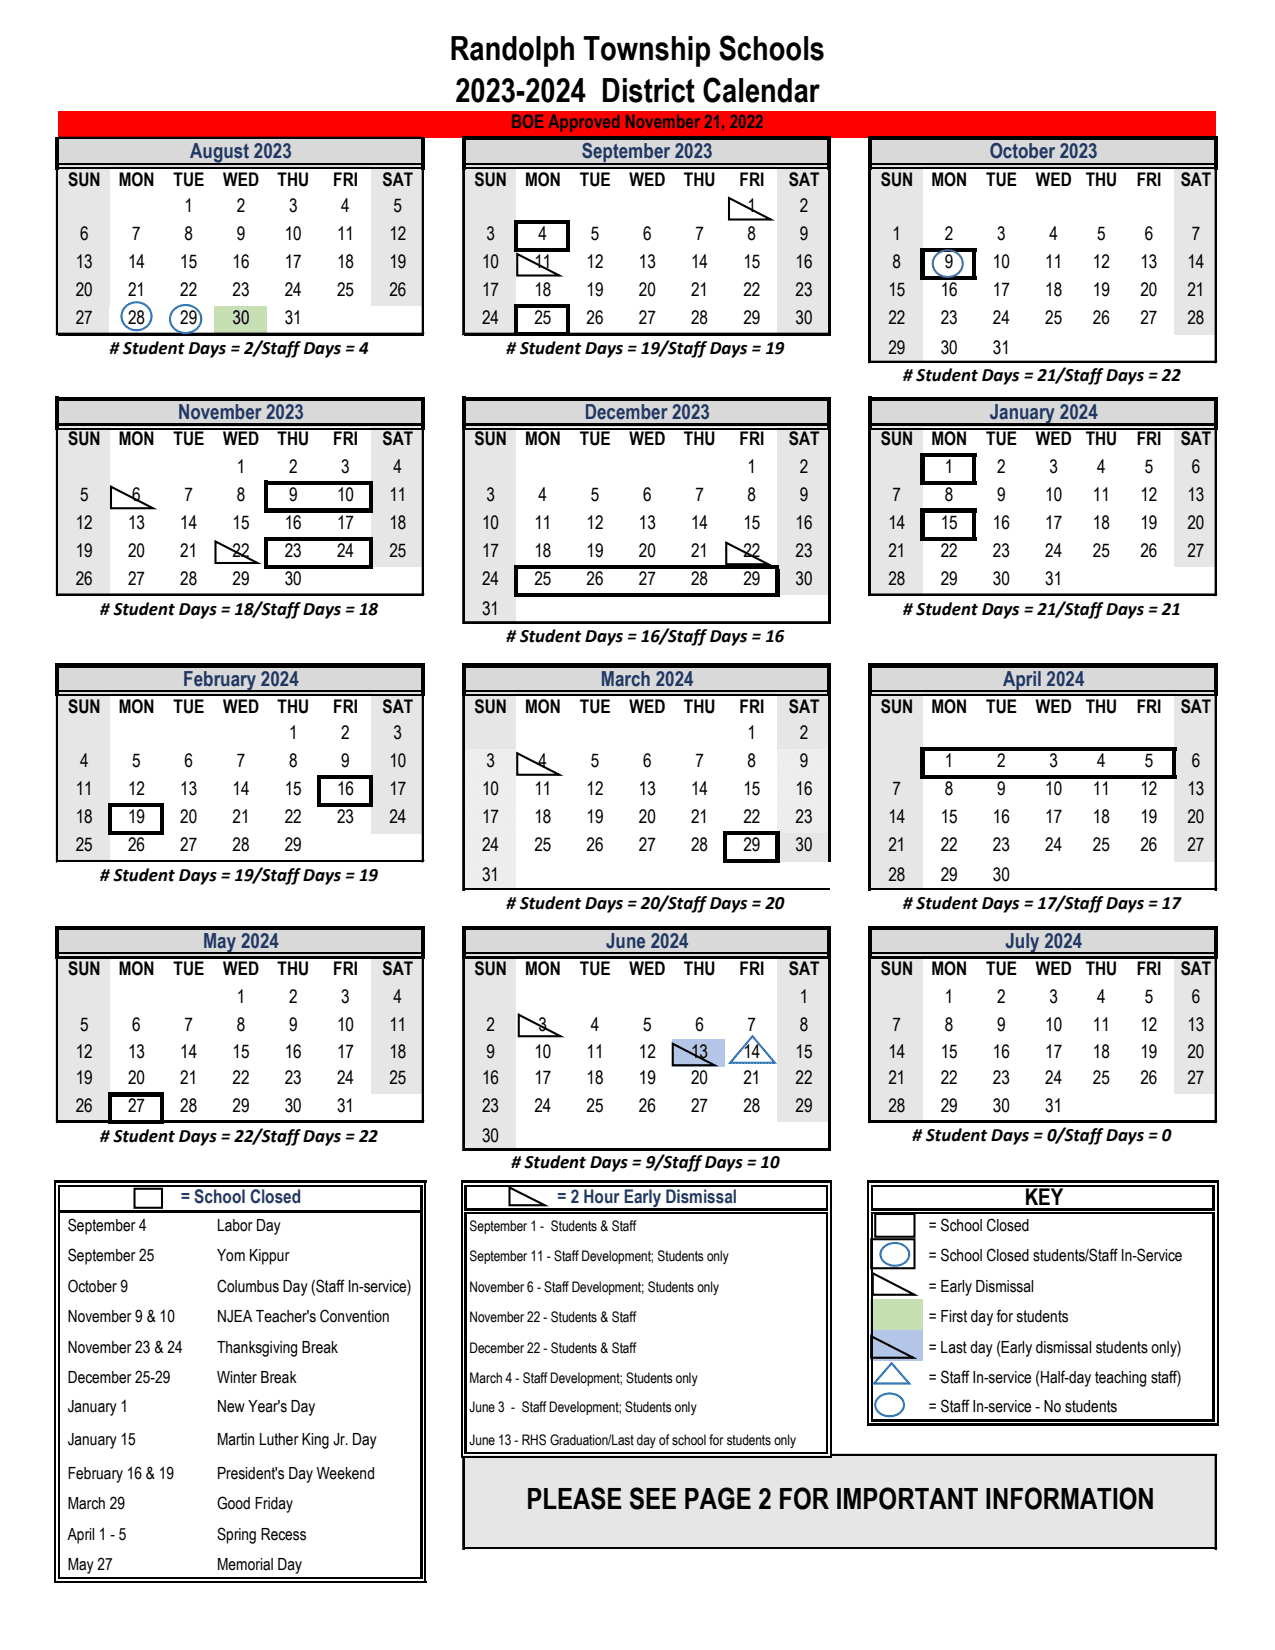 Randolph Township School District Calendar 20232024 in PDF